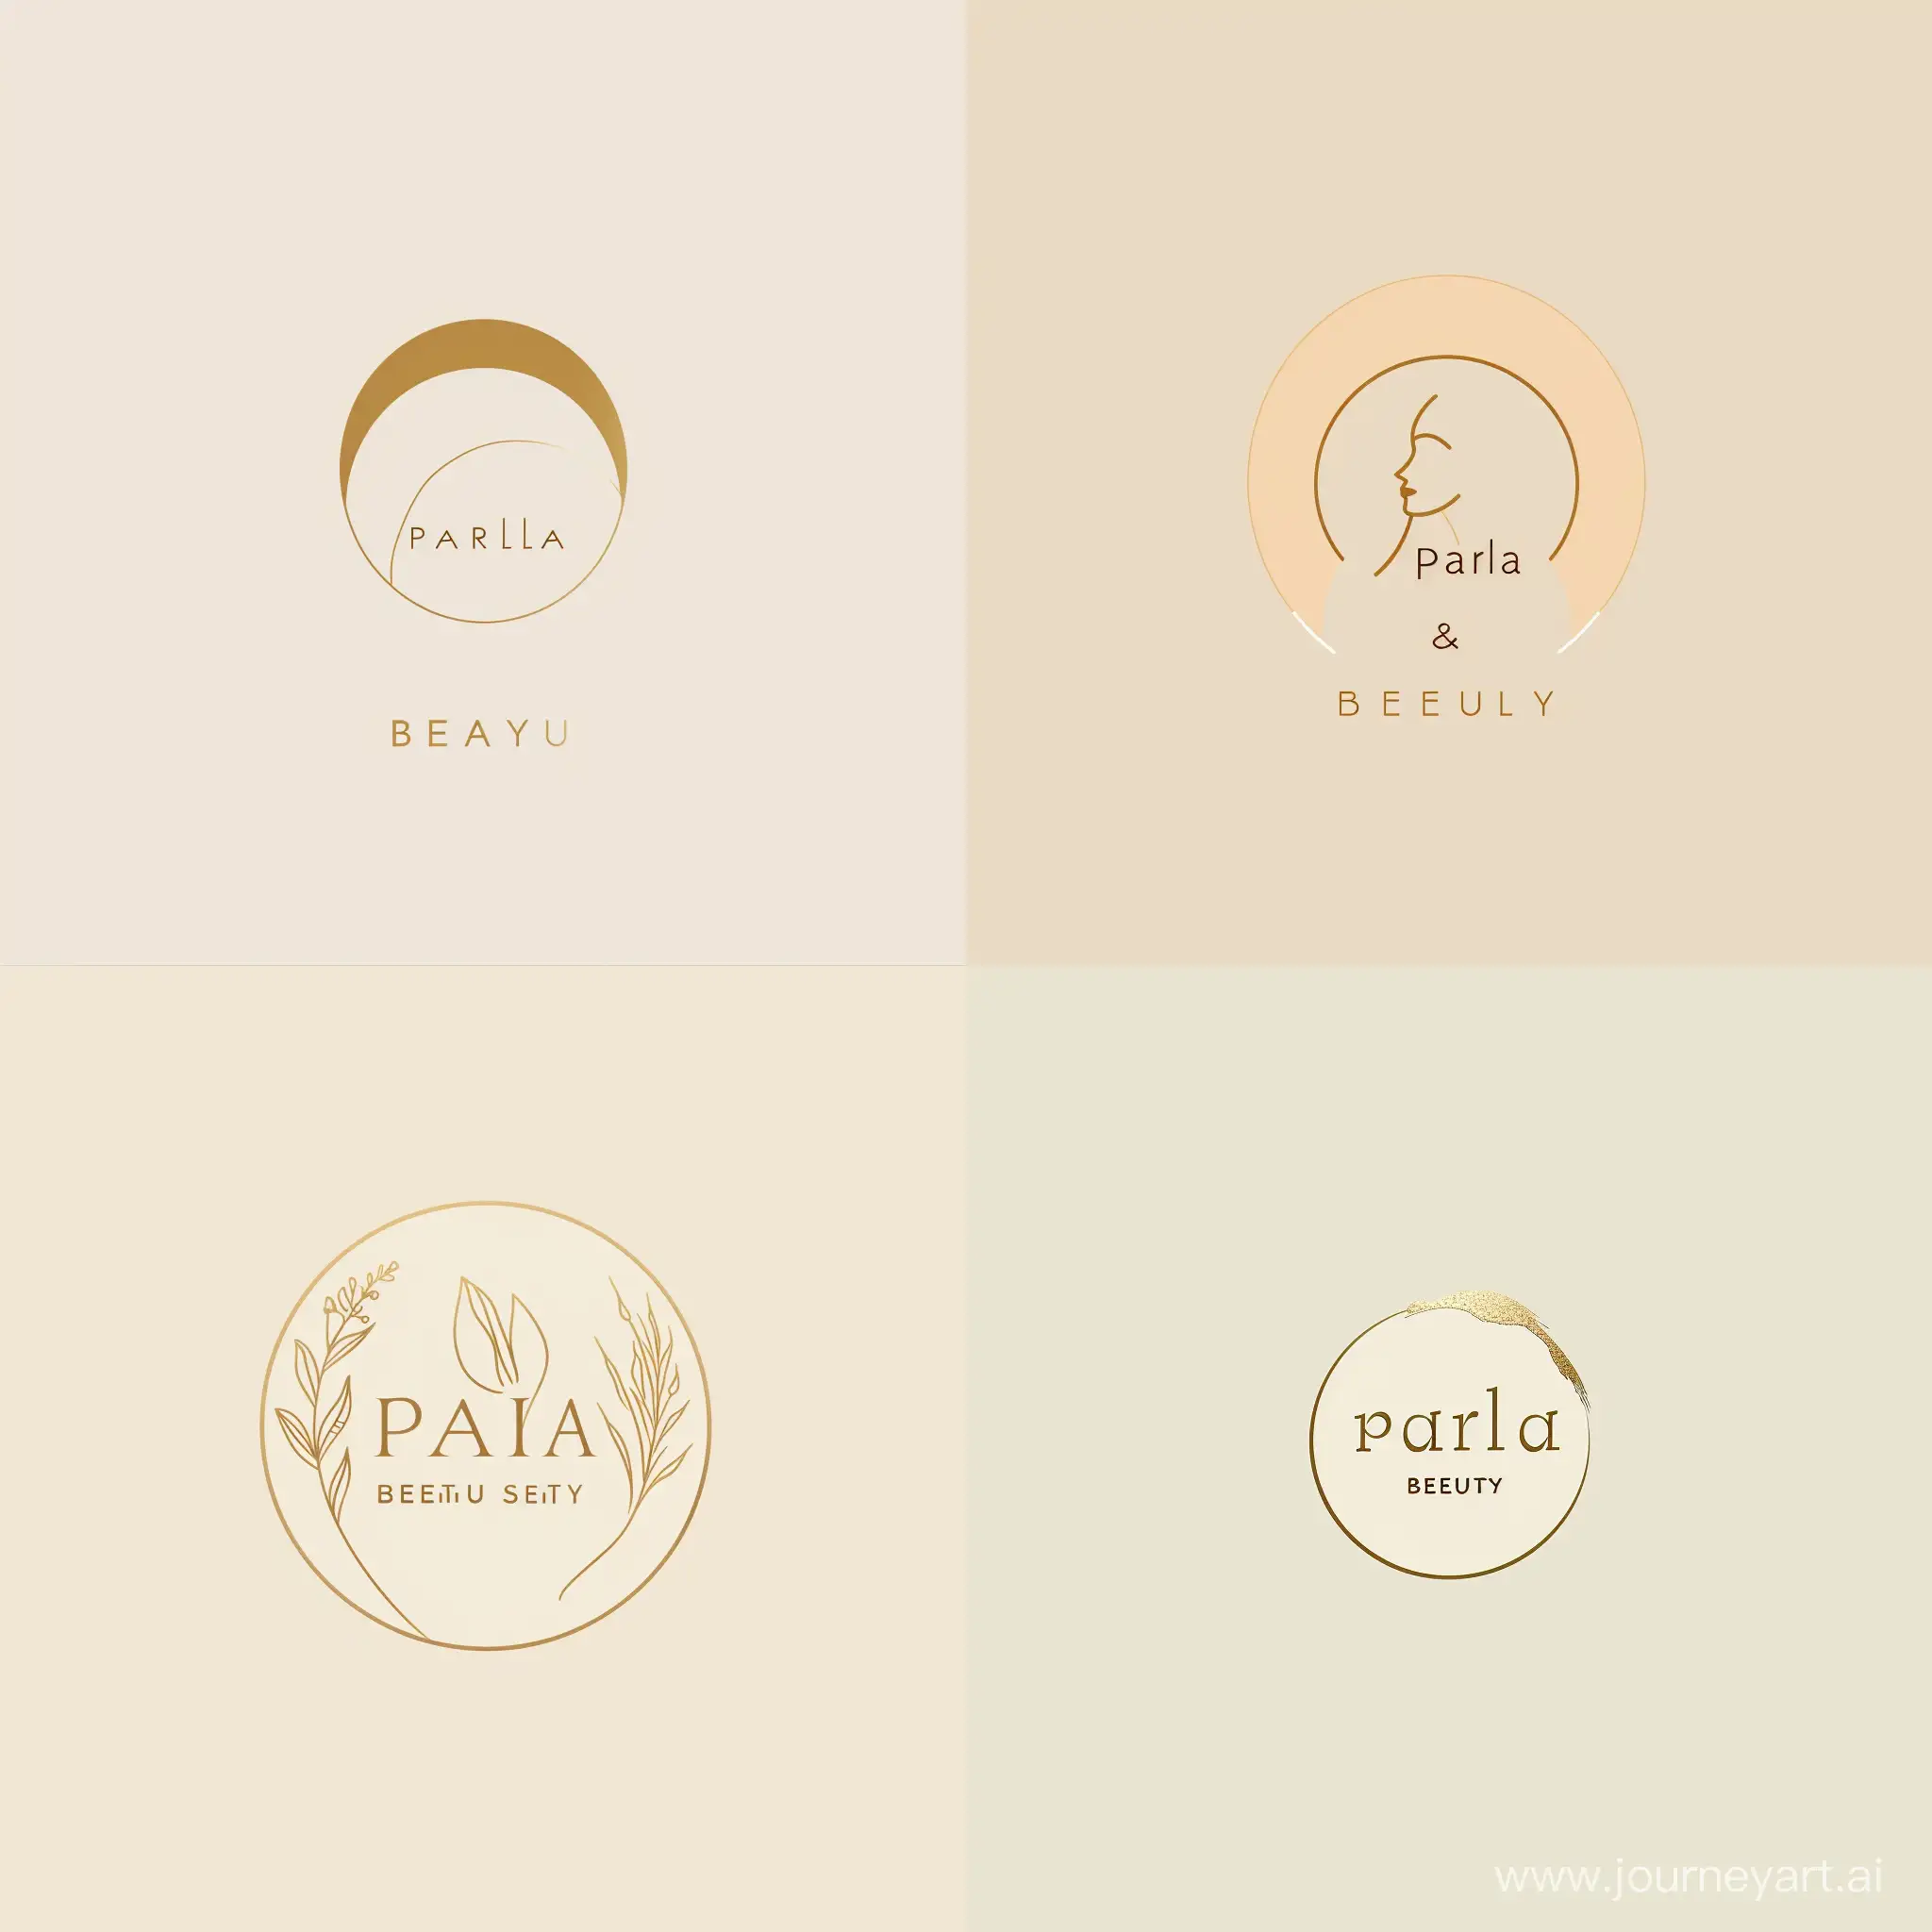 Elegant-Parla-Beauty-Salon-Logo-in-Cream-and-Gold-Tones